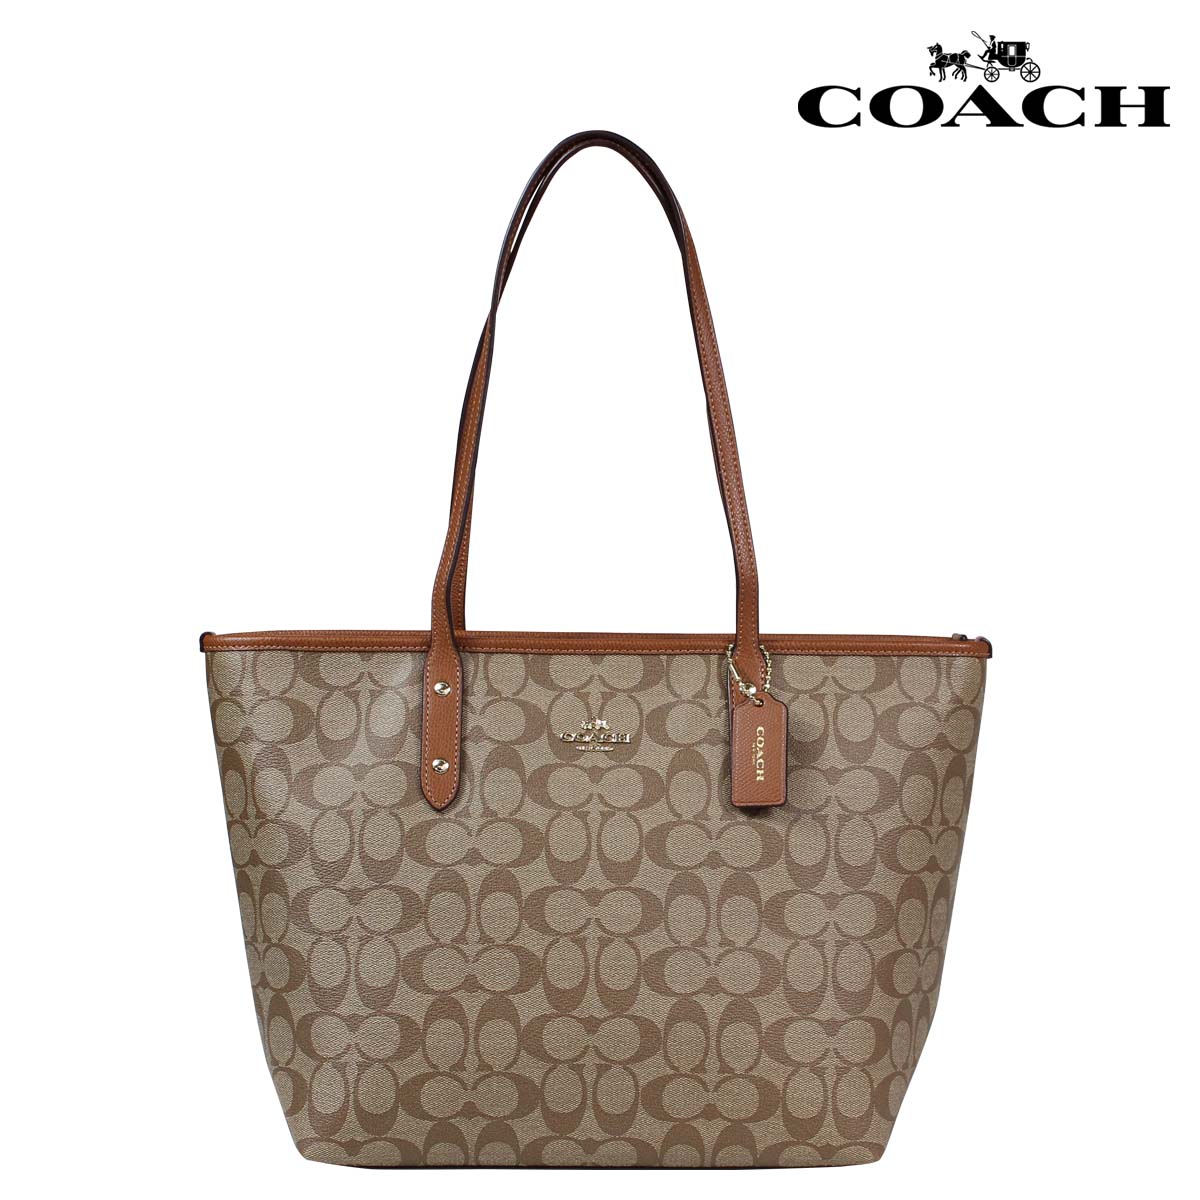 Sugar Online Shop: COACH coach bag tote bag F36876 khaki / saddle ladies | Rakuten Global Market